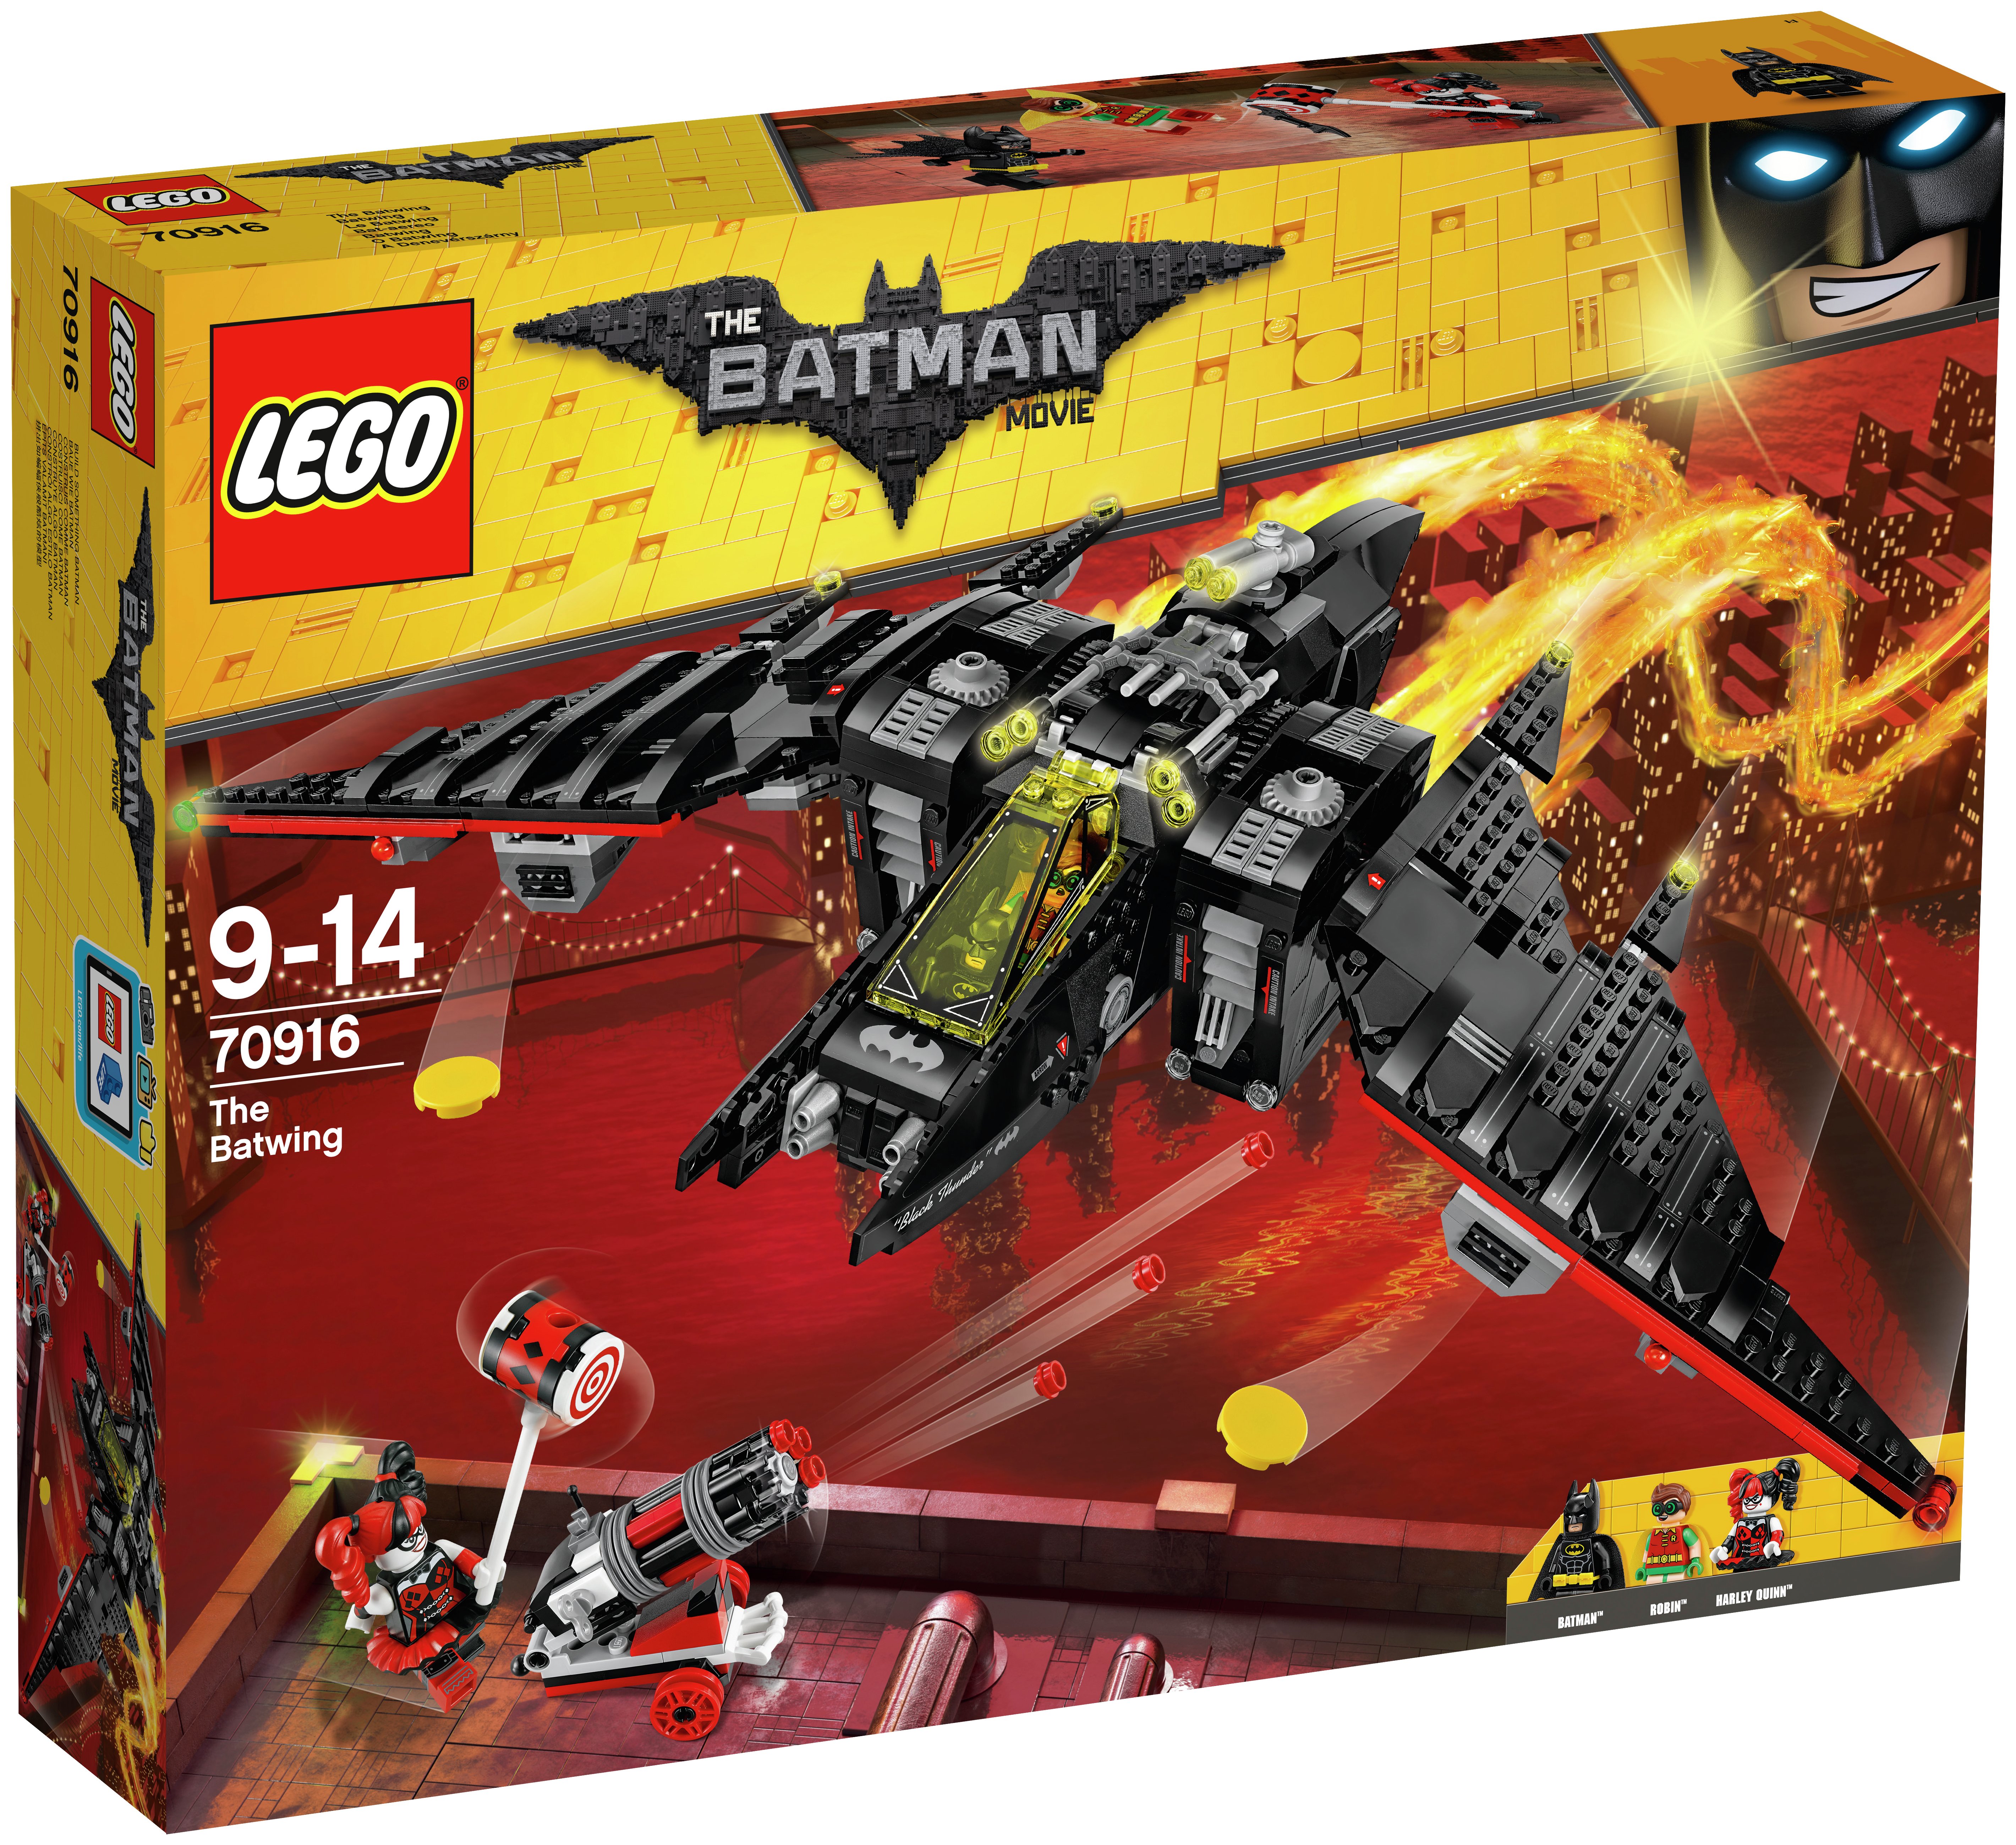 LEGO The Batman Movie Batwing Vehicle - 70916